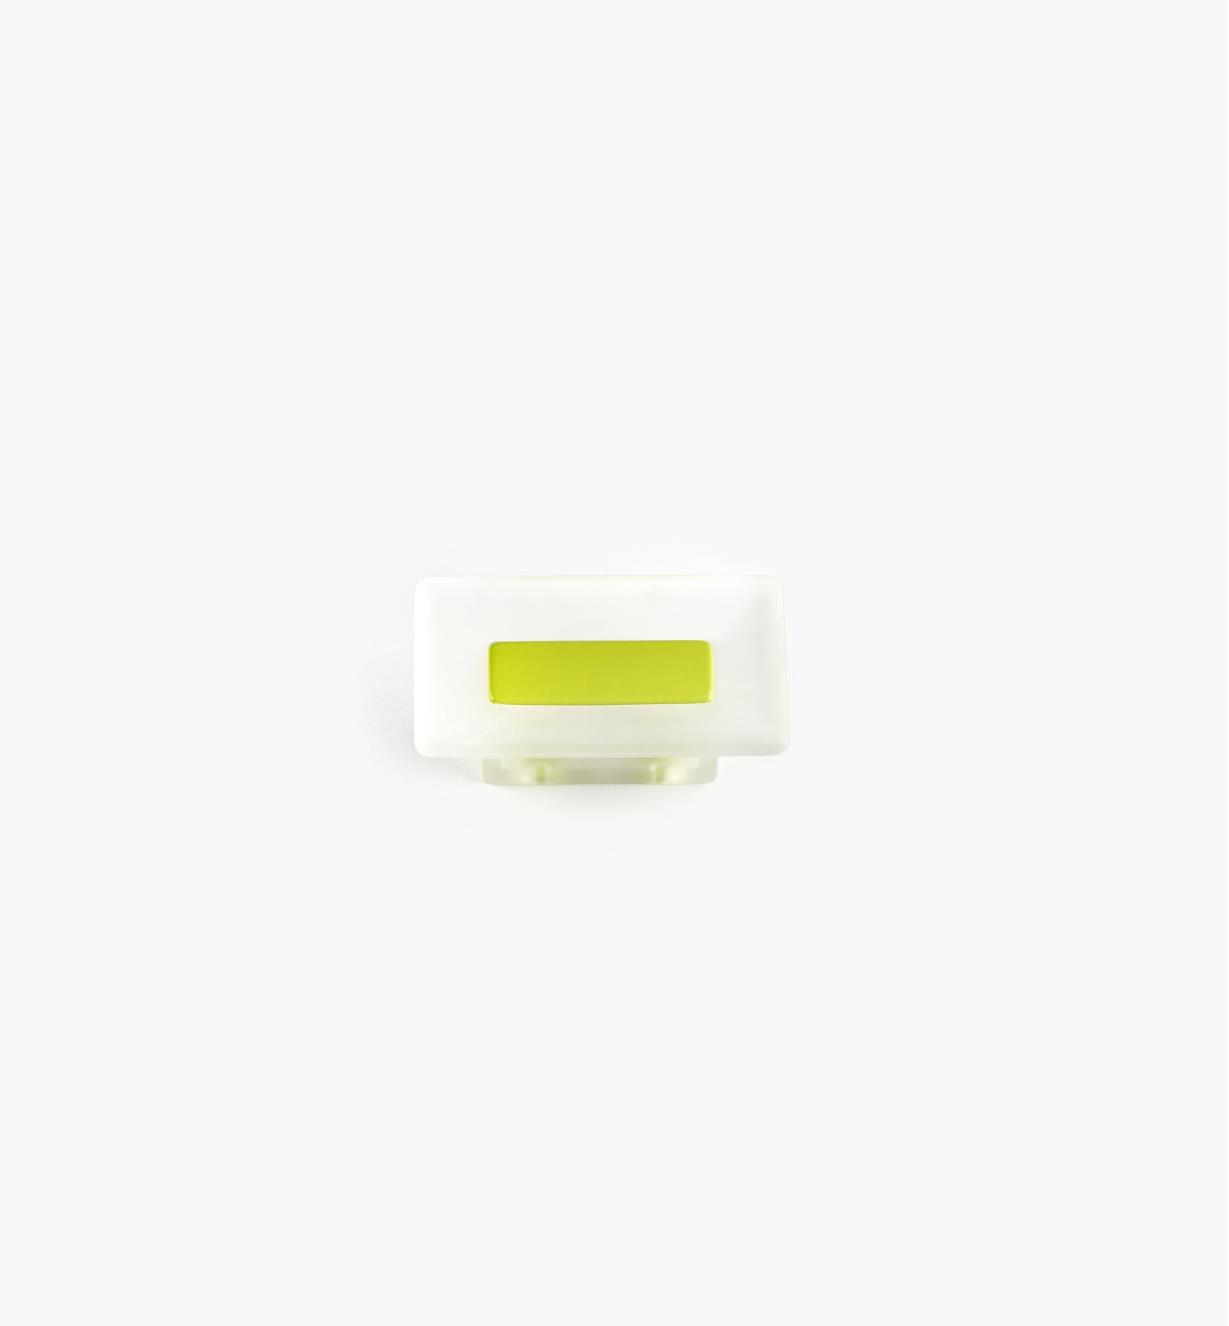 00W5421 - Bouton rectangulaire, 16 mm, série Bungee, vert-jaune